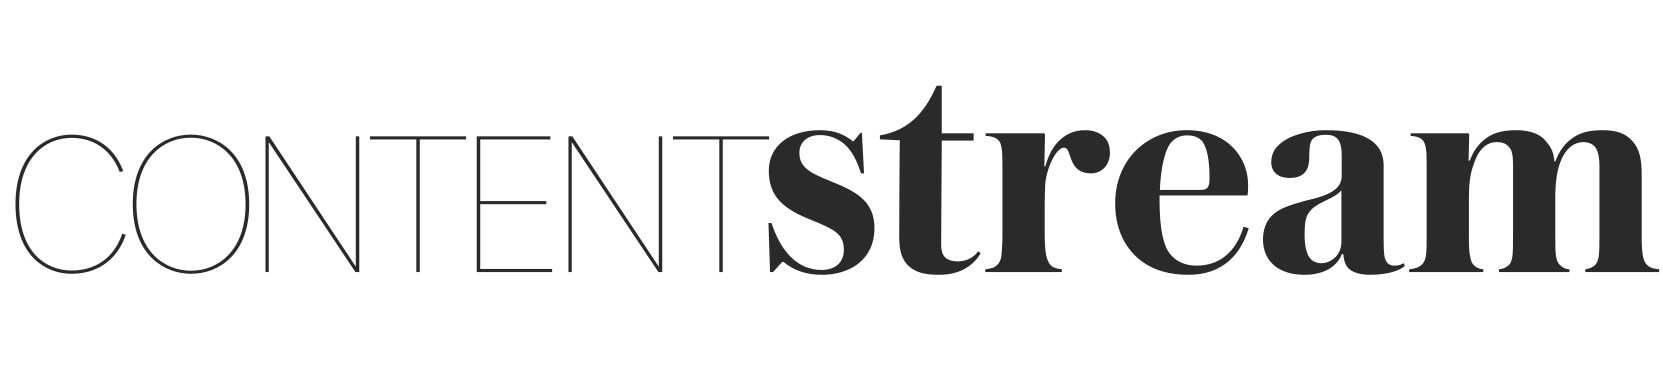 contentstream logo